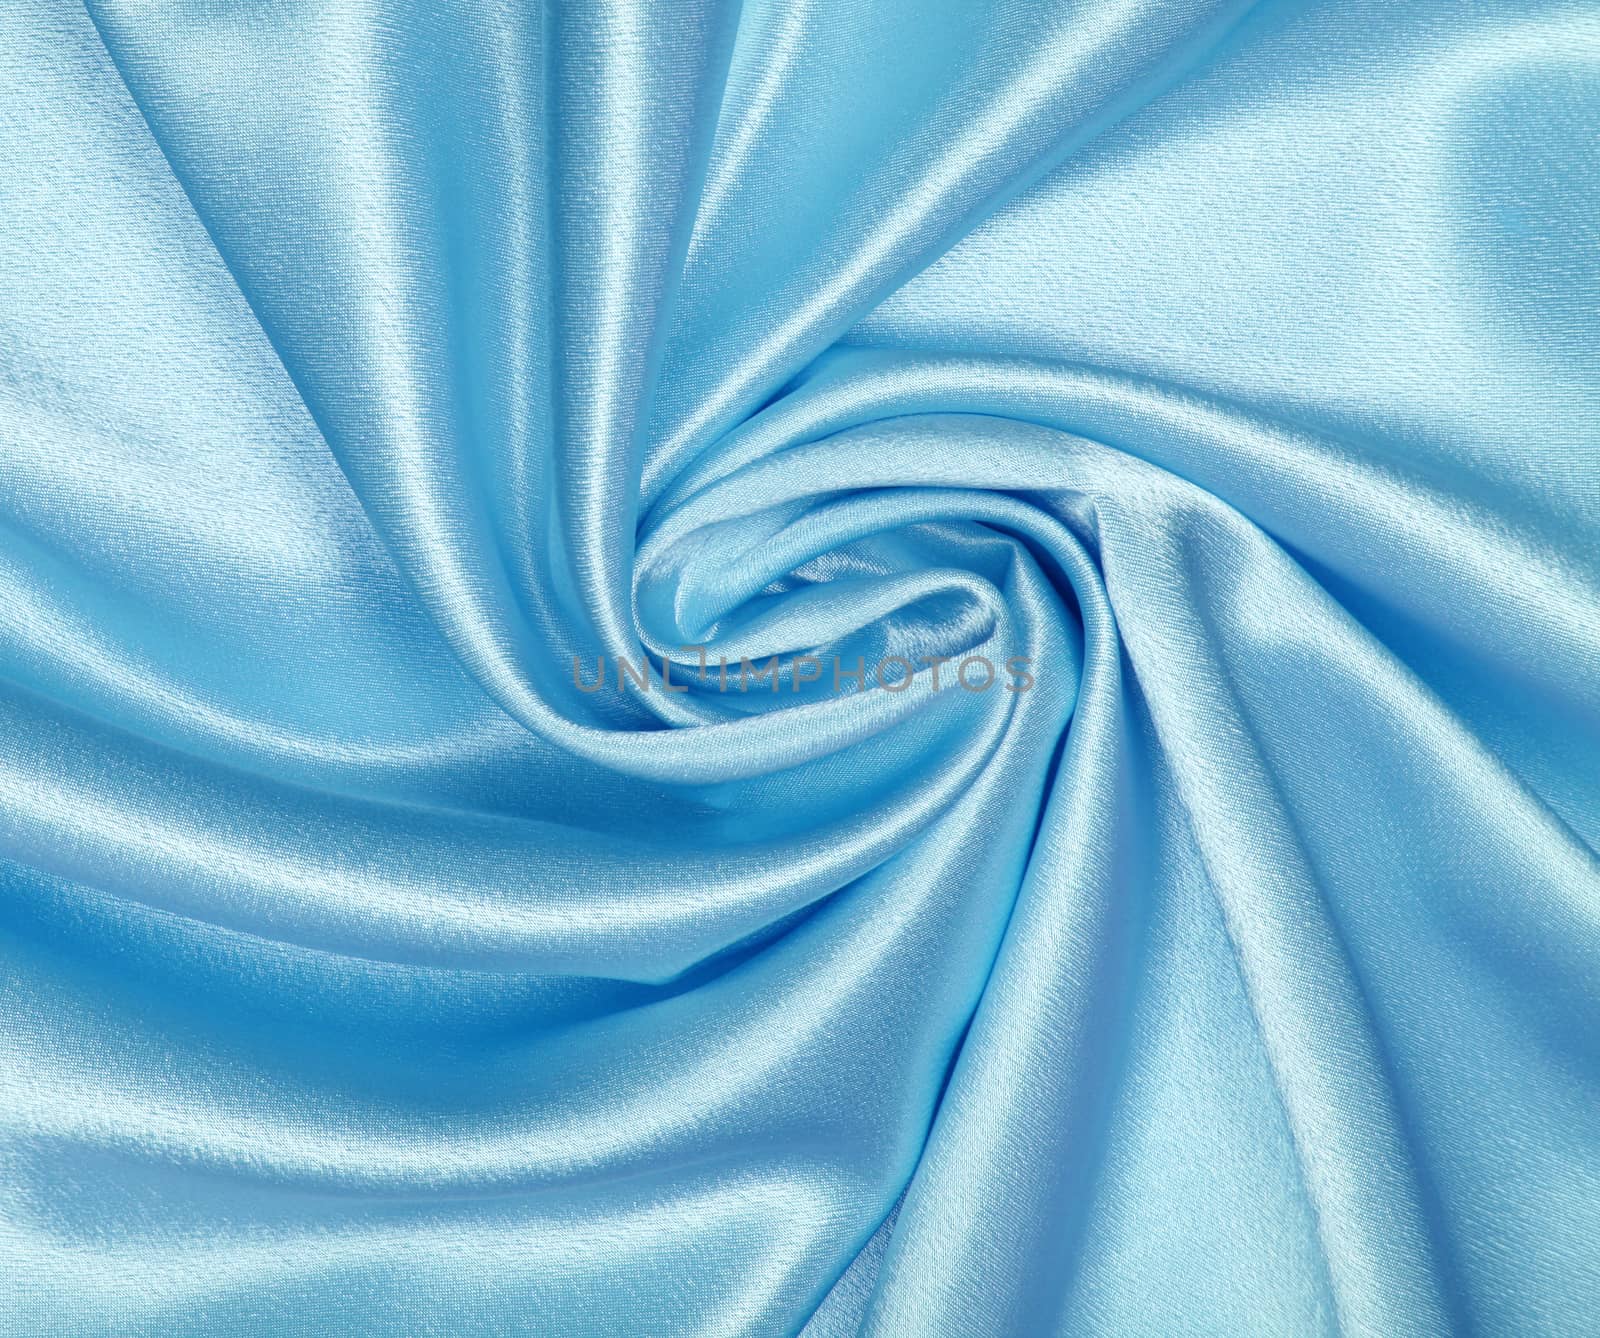 Smooth elegant blue silk as background  by oxanatravel